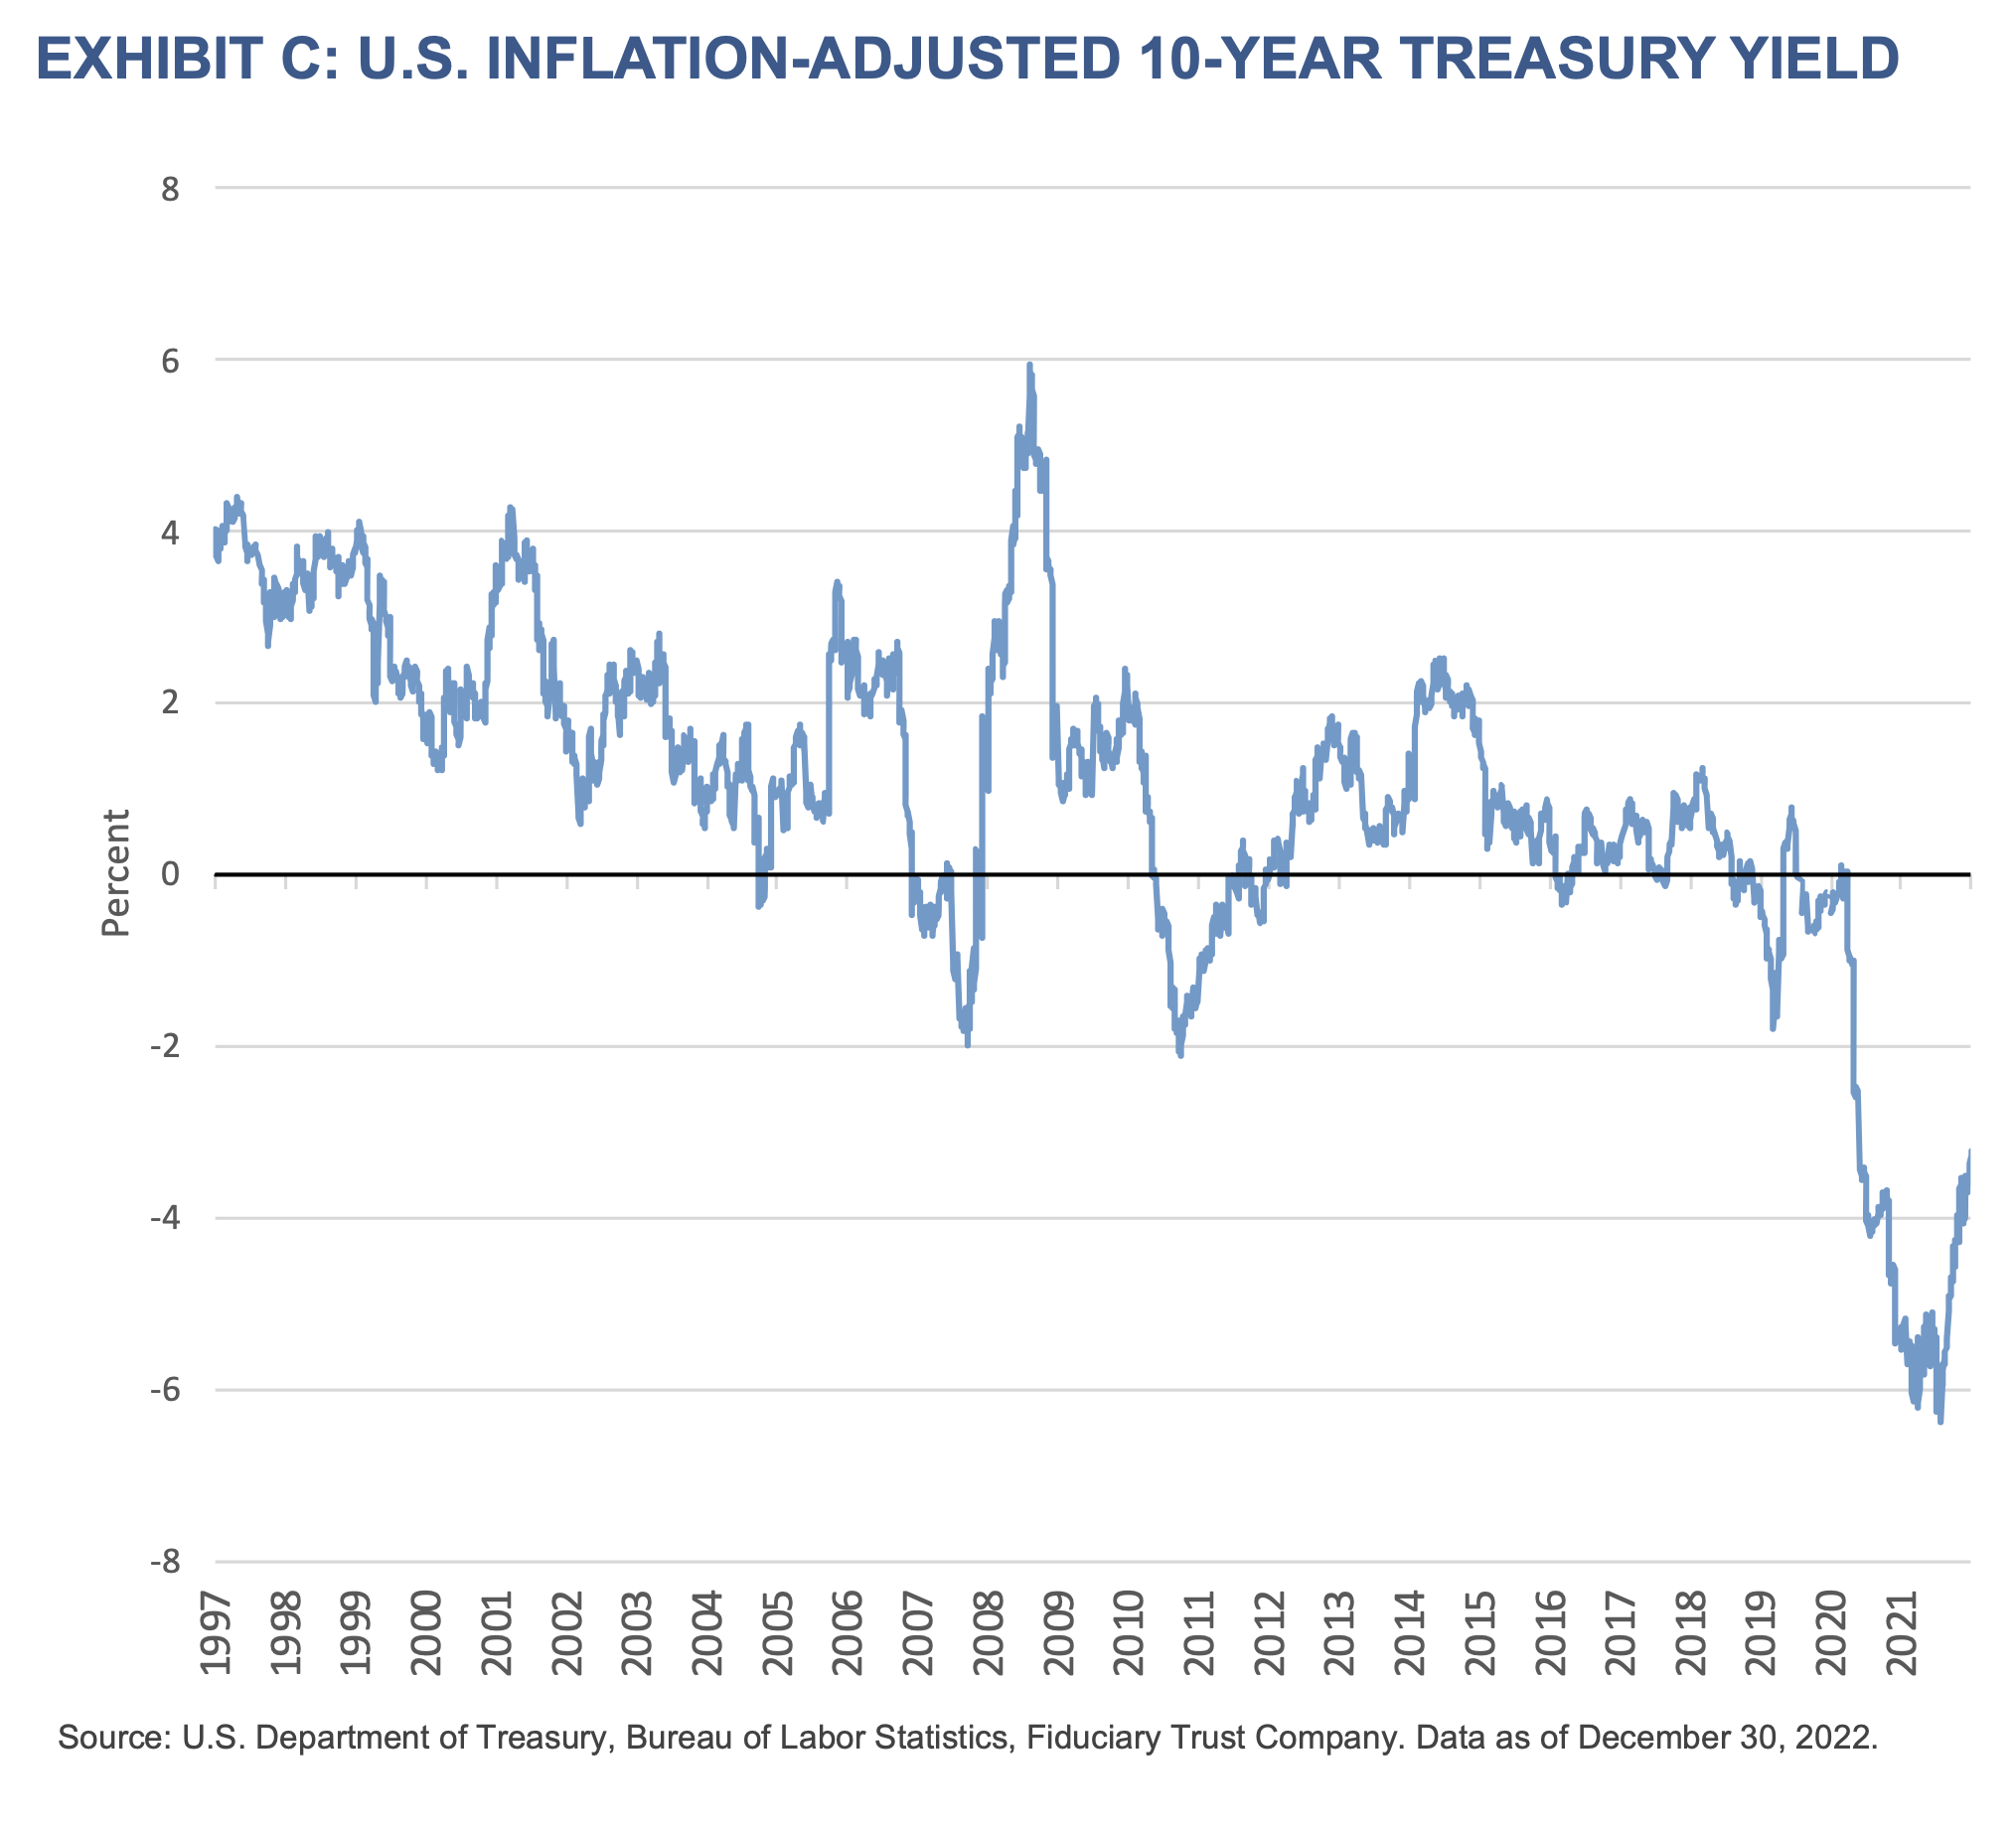 2023 Q1 Outlook - Exhibit C - U.S. Inflation-Adjusted 10-Year Treasury Yield